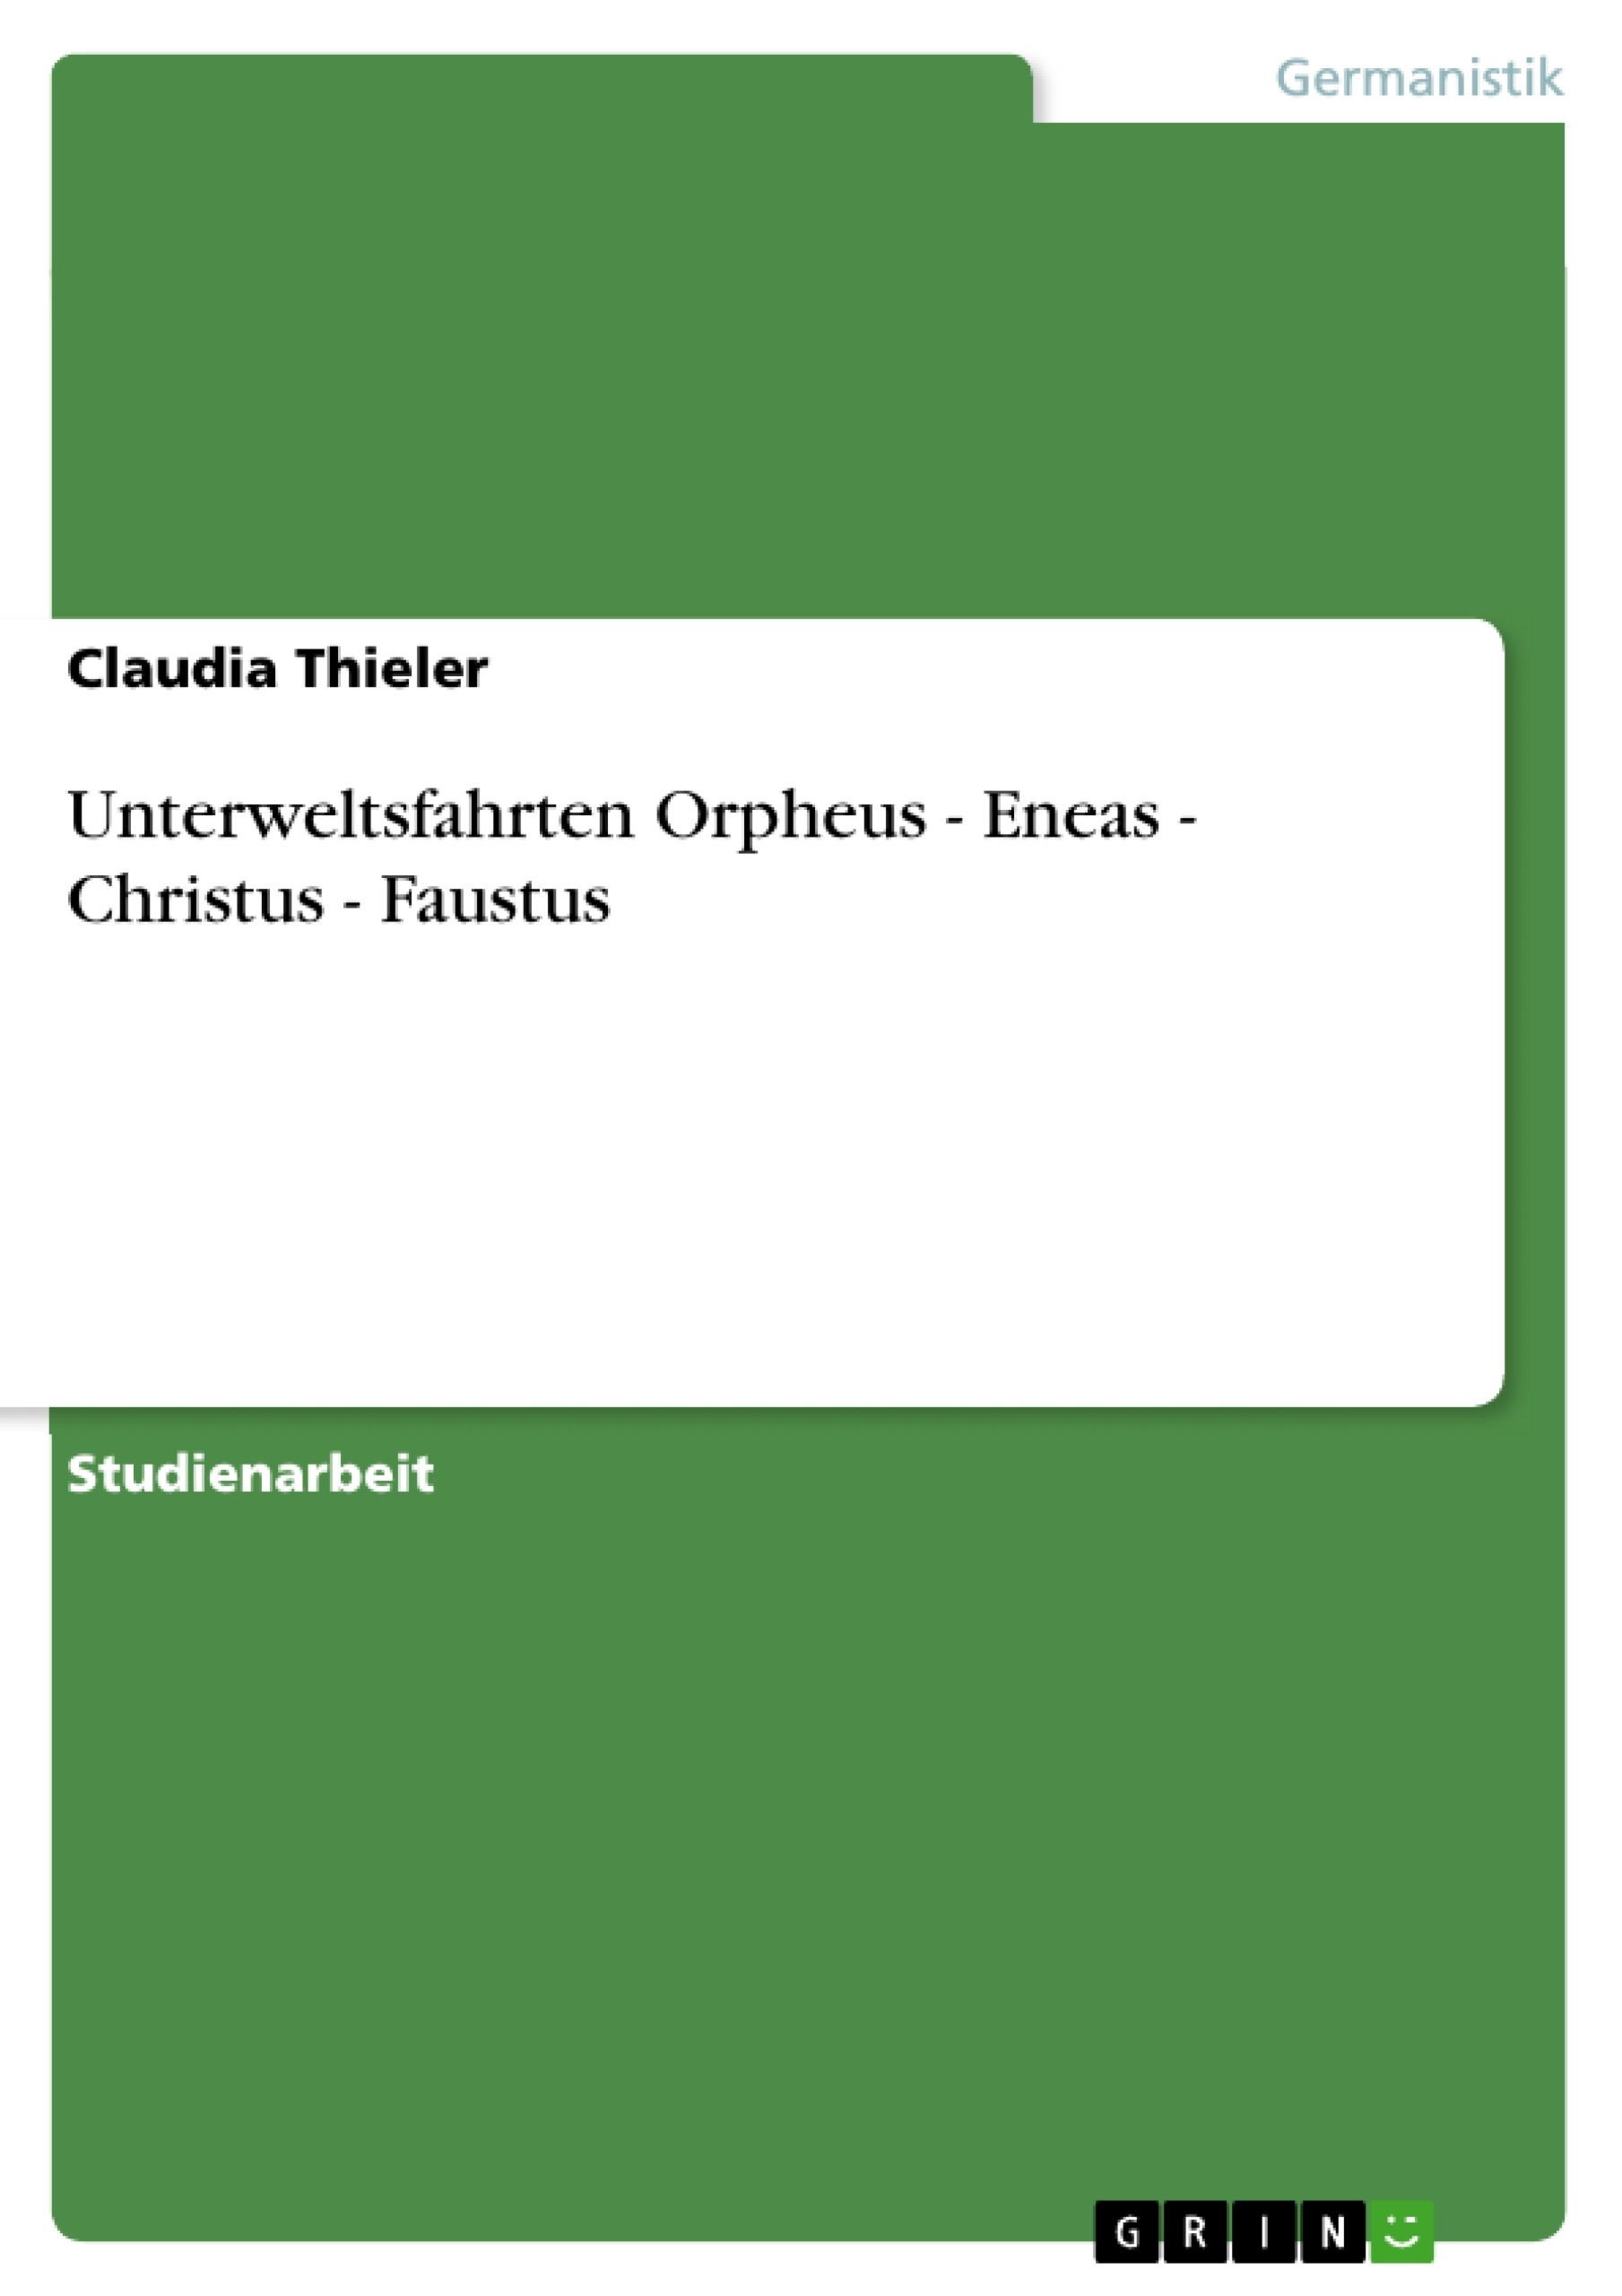 Titre: Unterweltsfahrten Orpheus - Eneas - Christus - Faustus